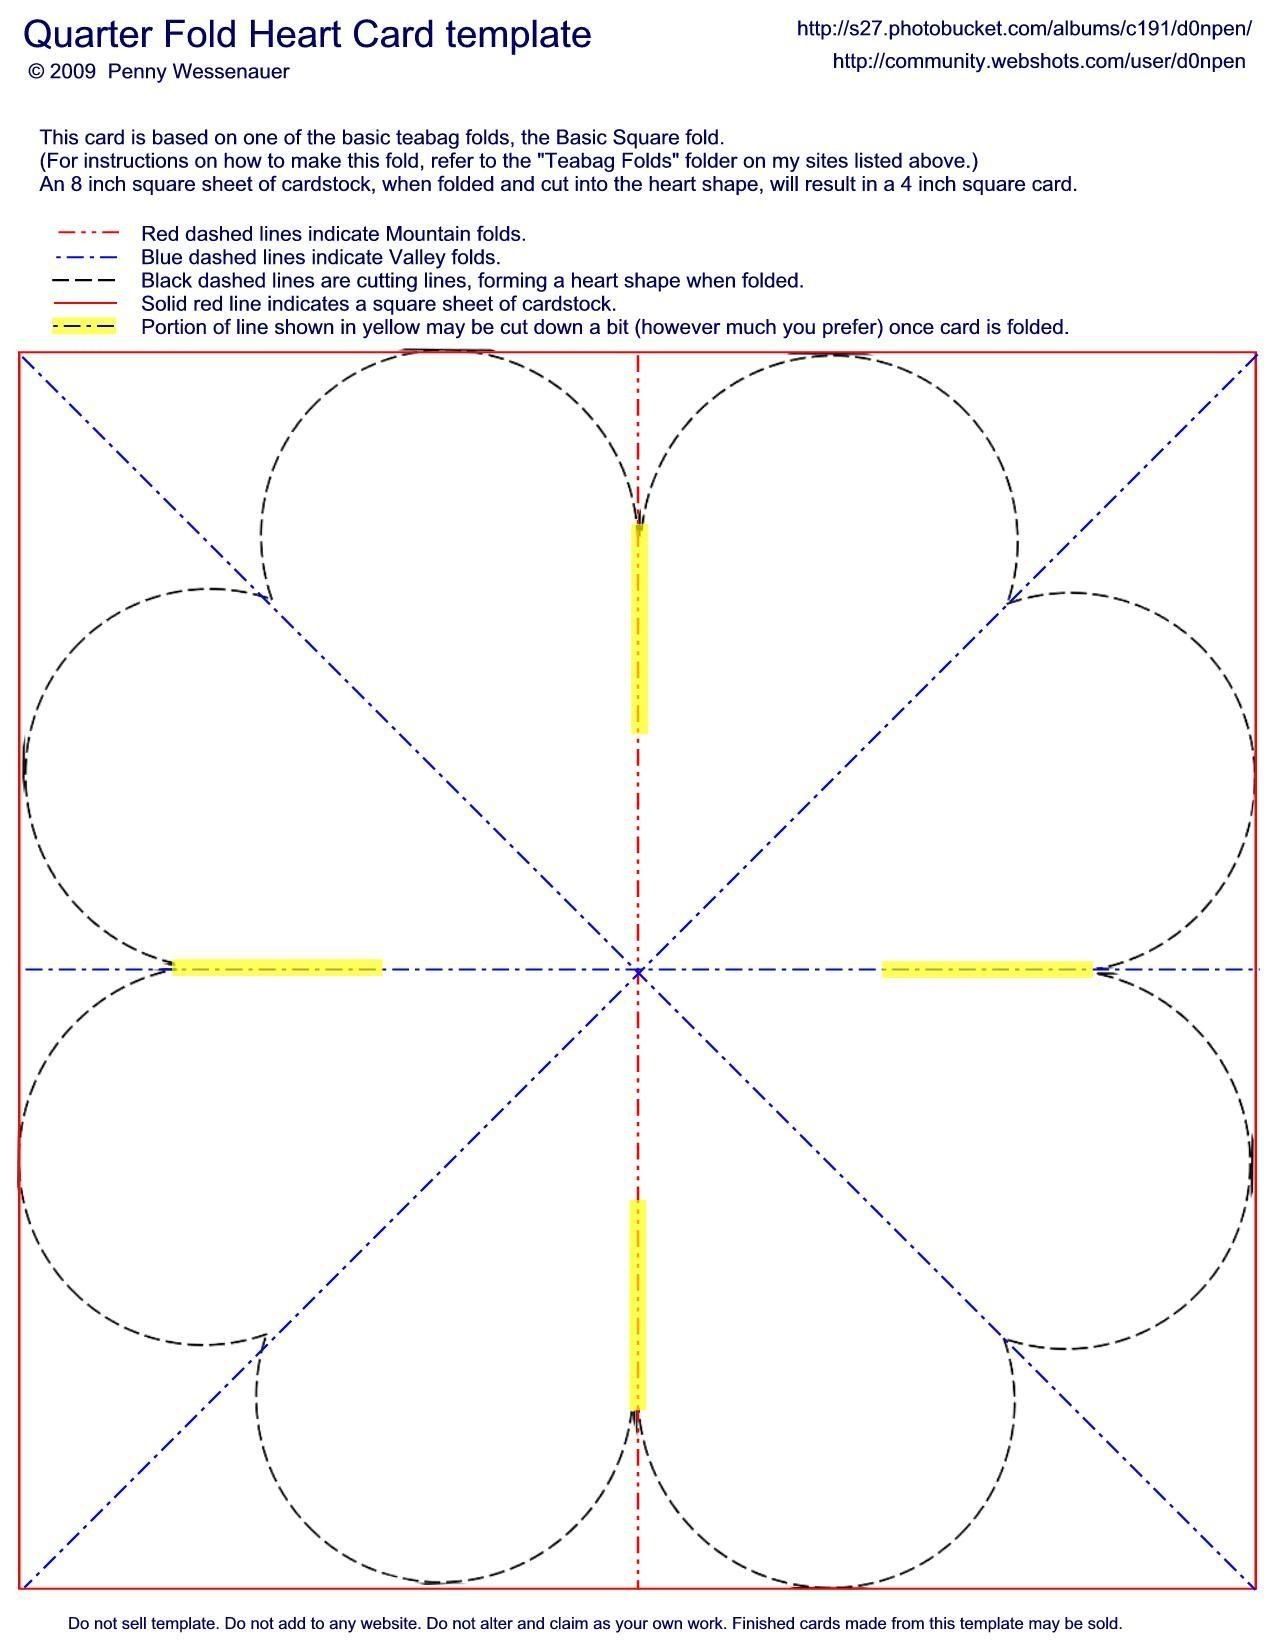 Quarter-Fold Heart Card Template | Valentines | Card Making - Free Printable Quarter Fold Christmas Cards